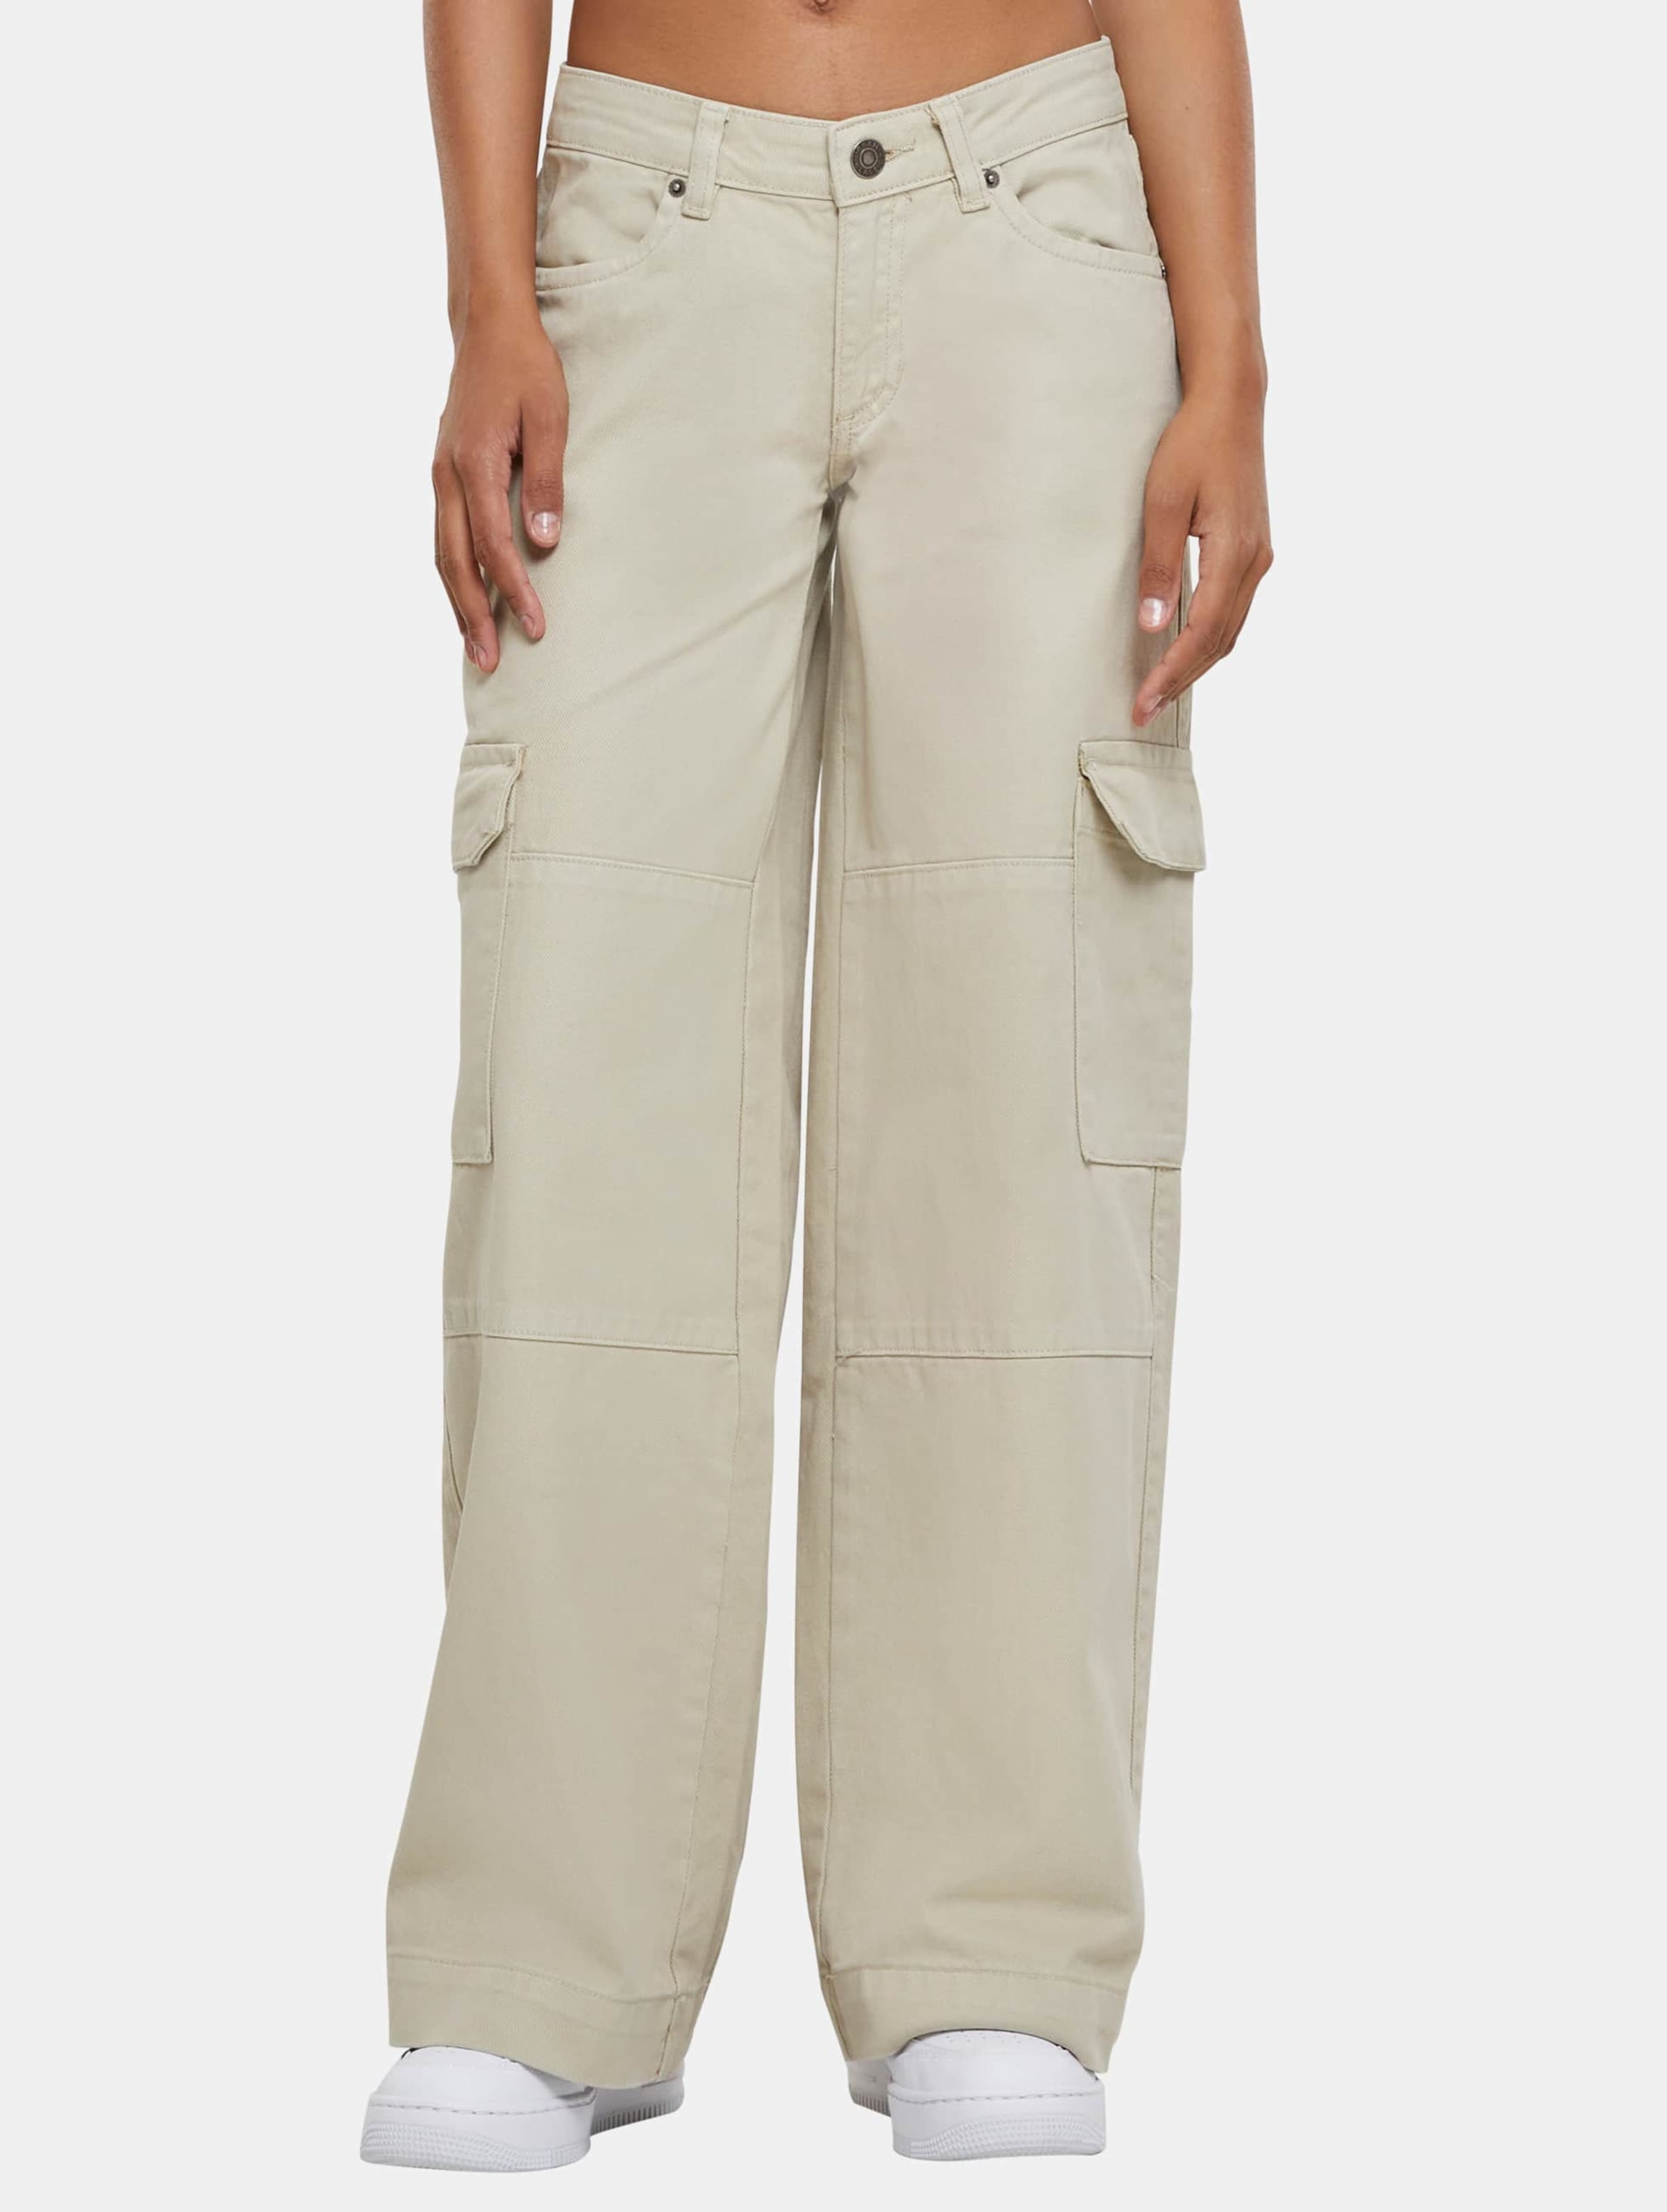 Urban Classics - Low Waist Denim Cargo trousers - Taille, 33 inch - Gebroken wit